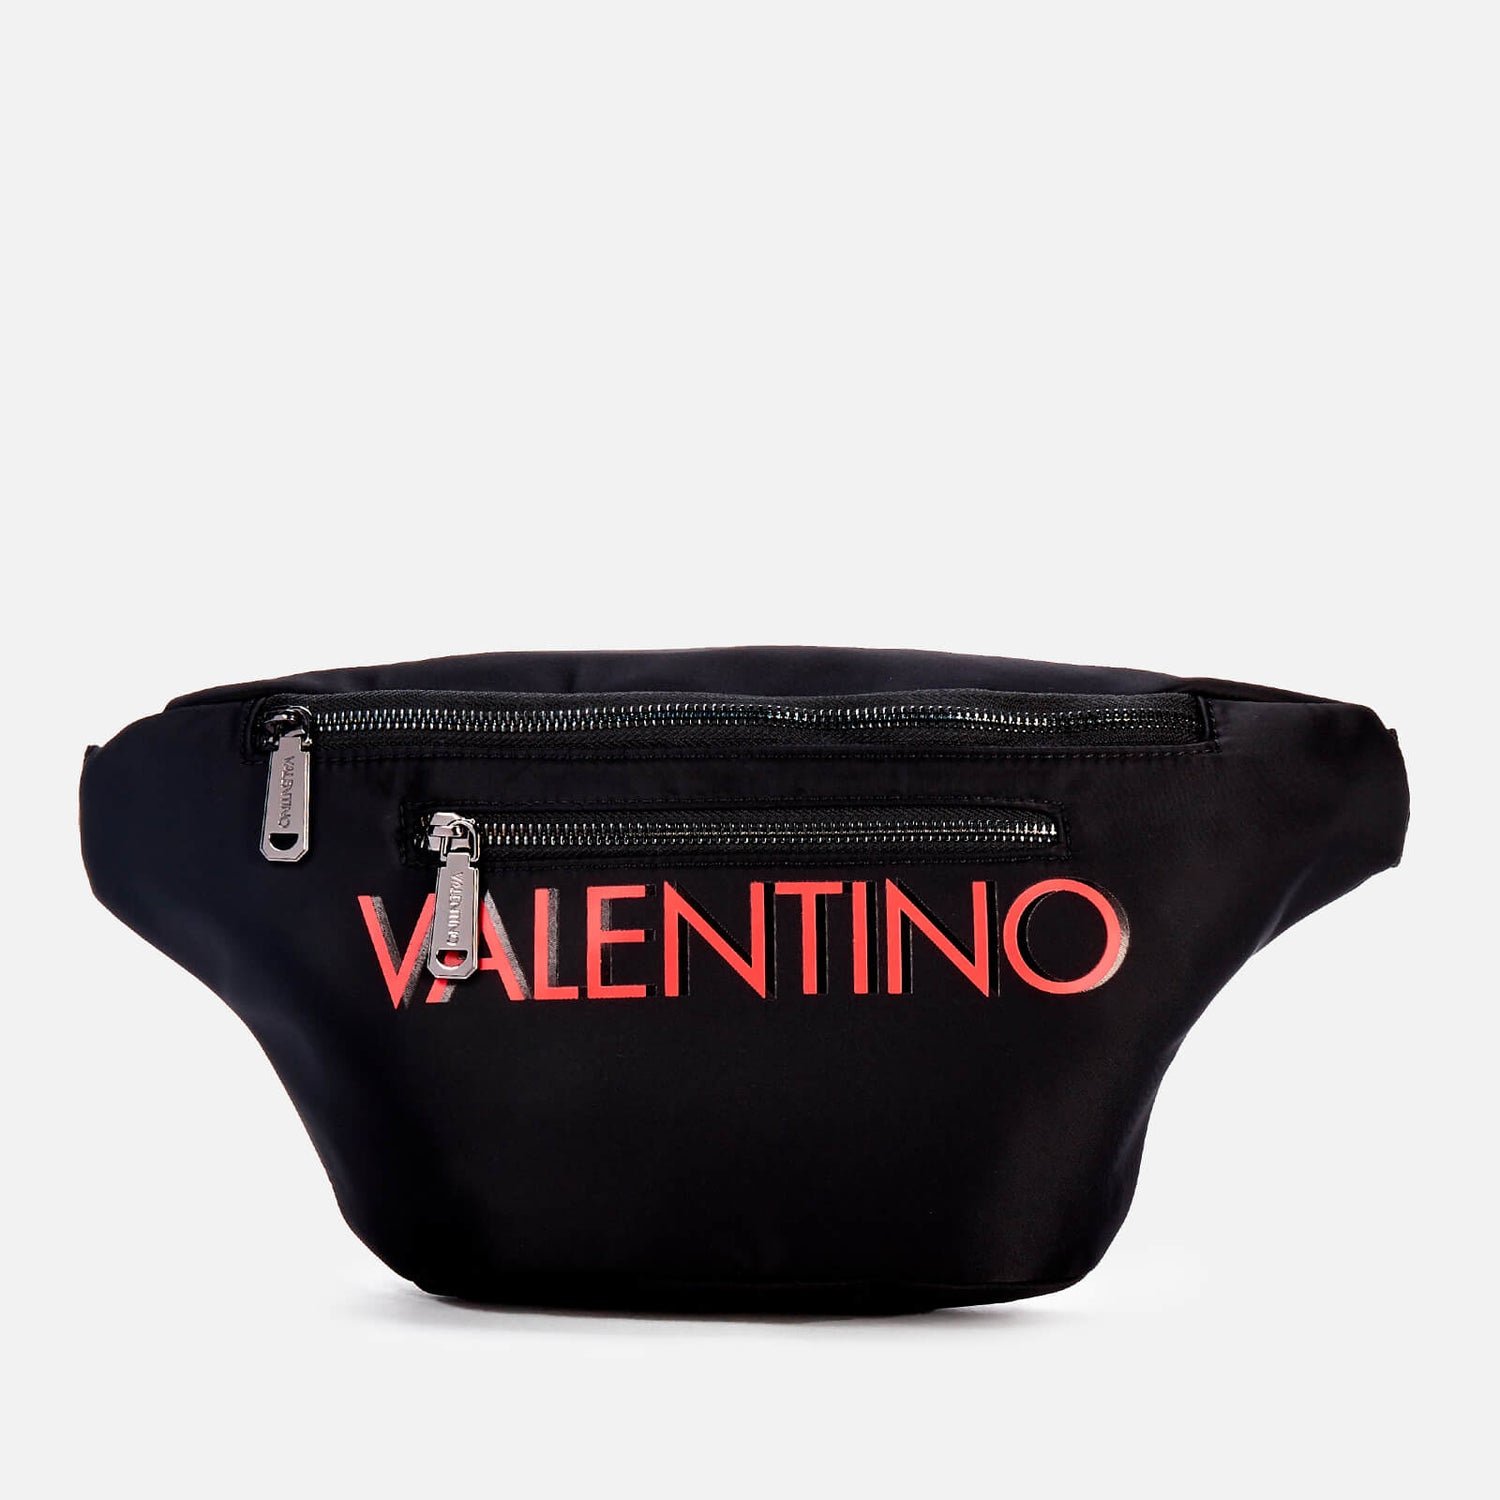 Valentino Bags Men's Ash Belt Bag - Black